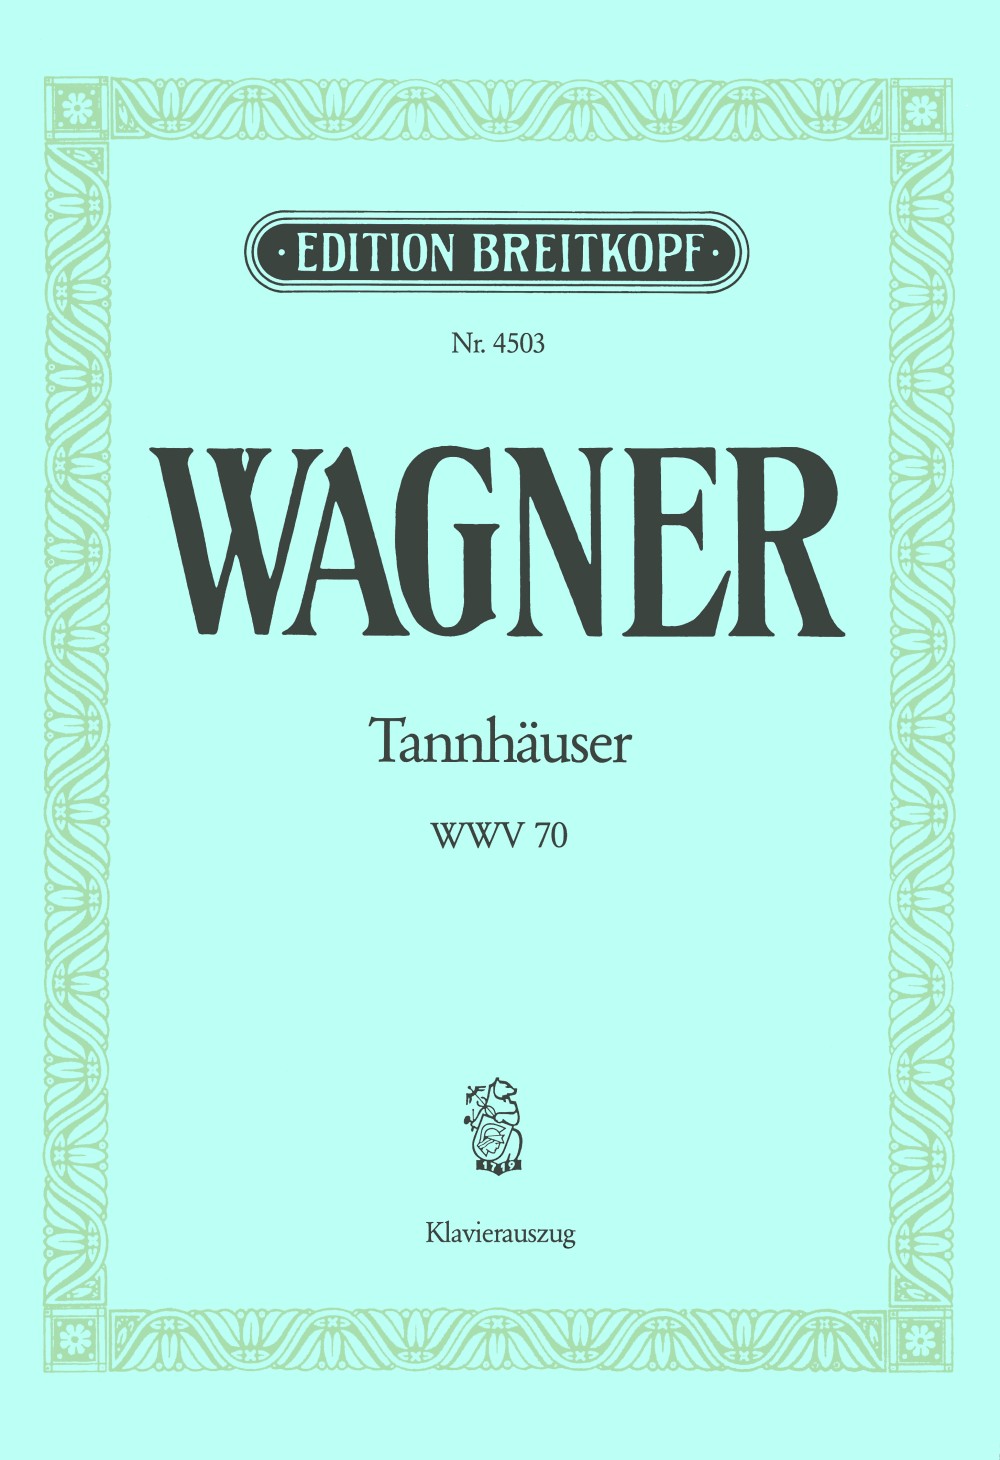 Wagner Tannhäuser WWV 70